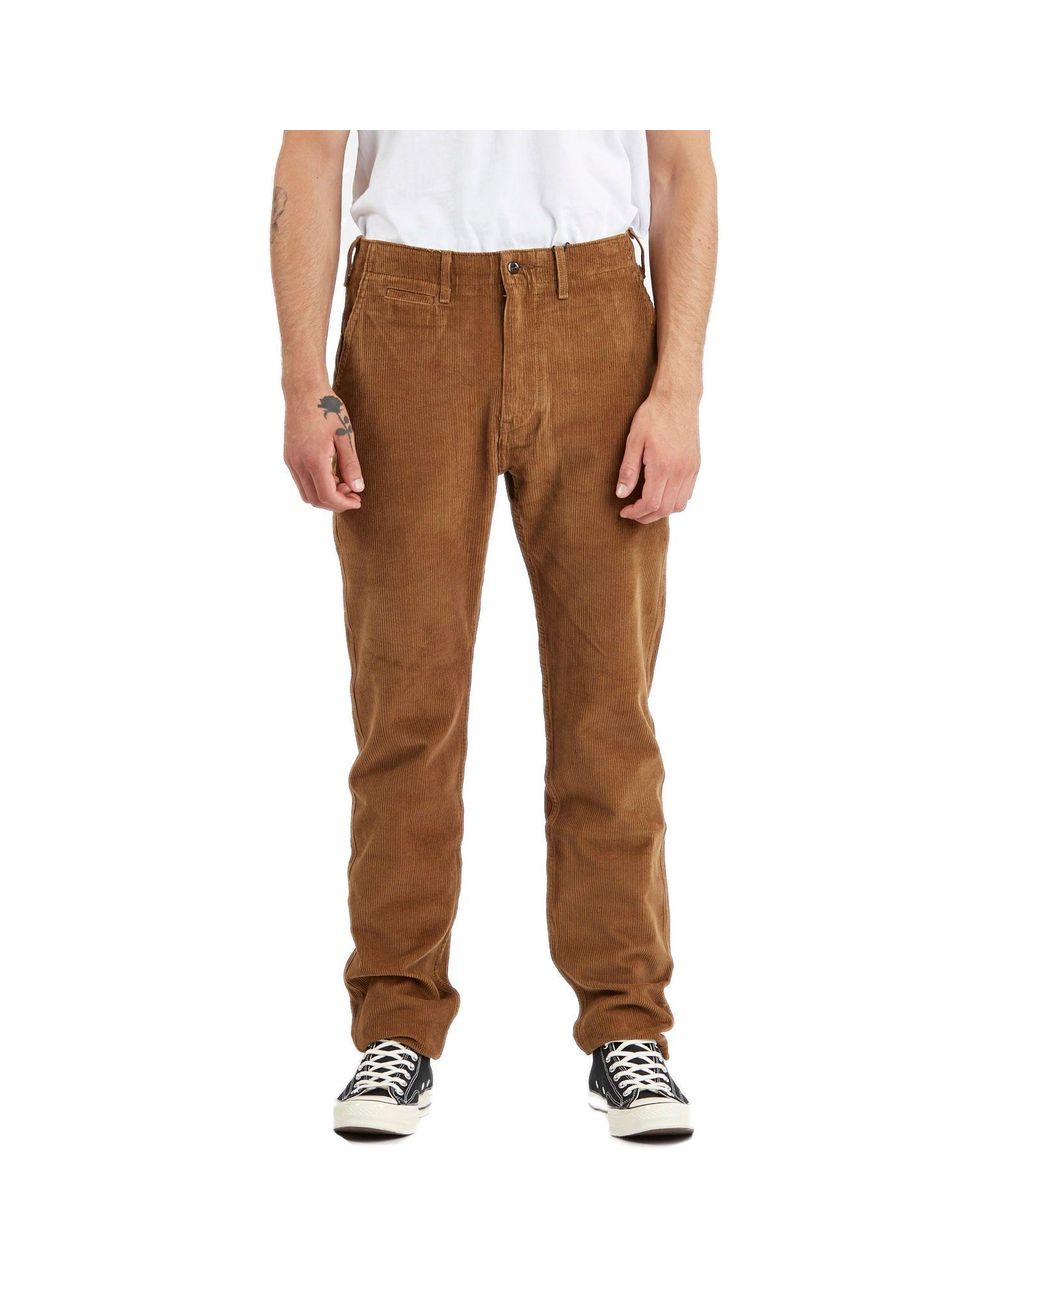 Introducir 52+ imagen levi's brown jeans - Abzlocal.mx